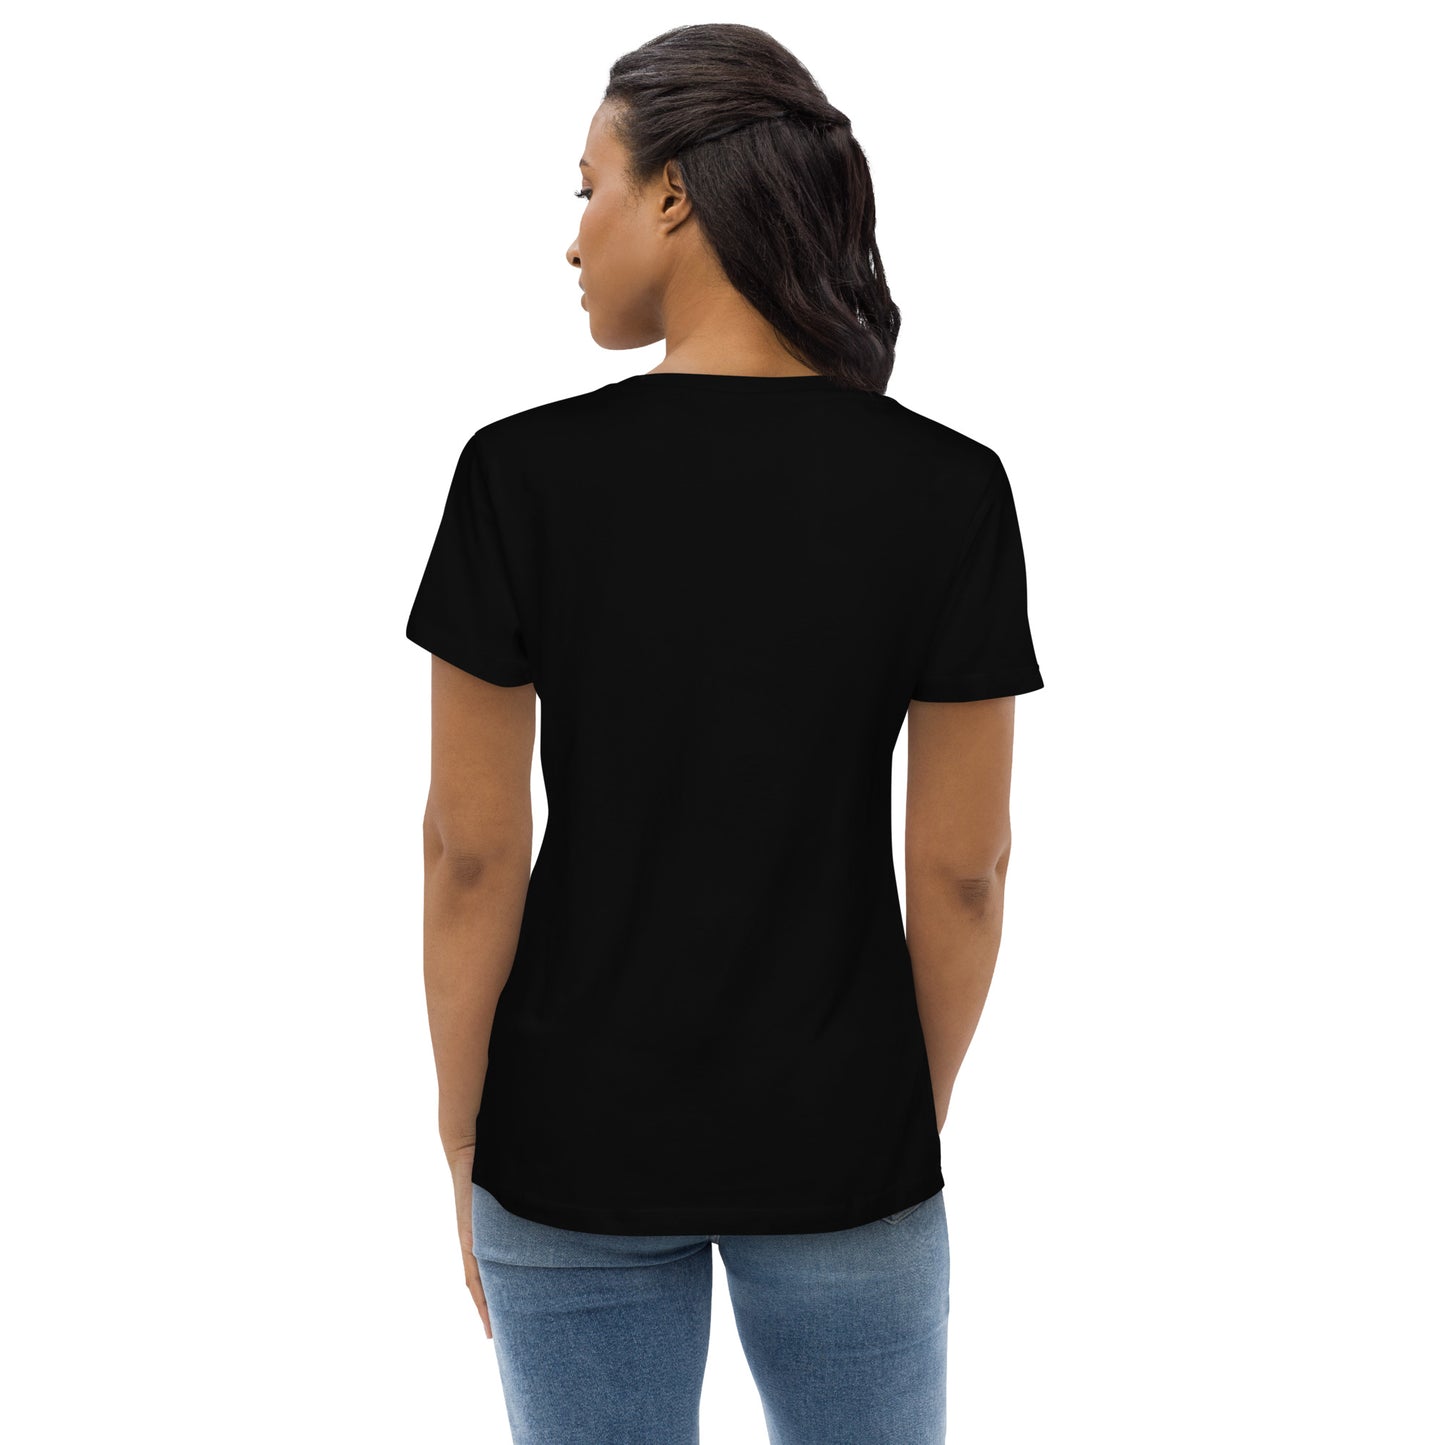 SOULSKY Logo Women's Crewneck T-shirt - Black